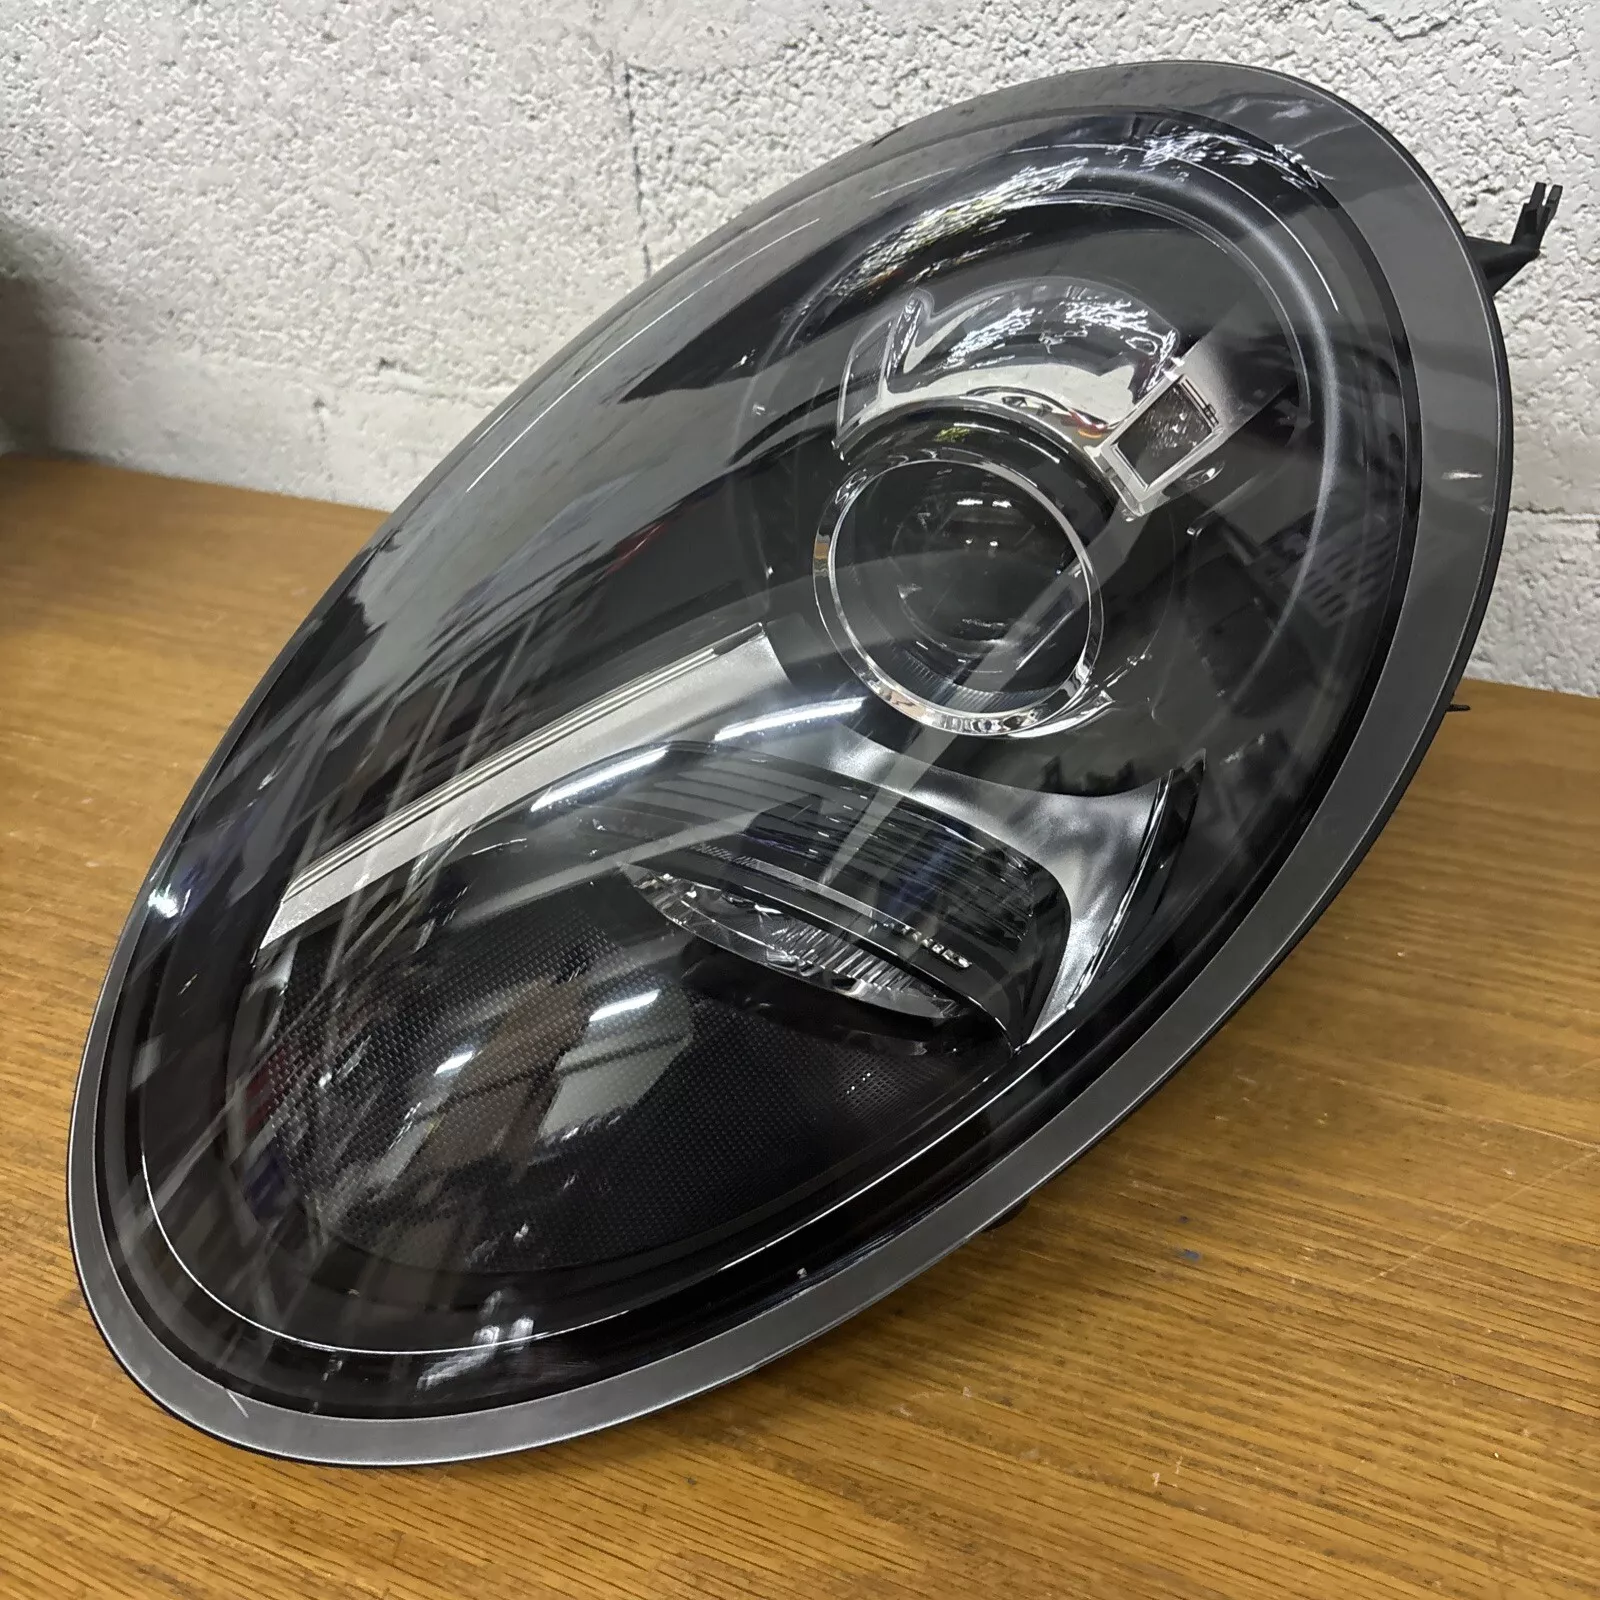 Lights - WTB - 991.2 PDLS Headlight (Driver Side LHD) - Used - 0  All Models - Haymarket, VA 20169, United States